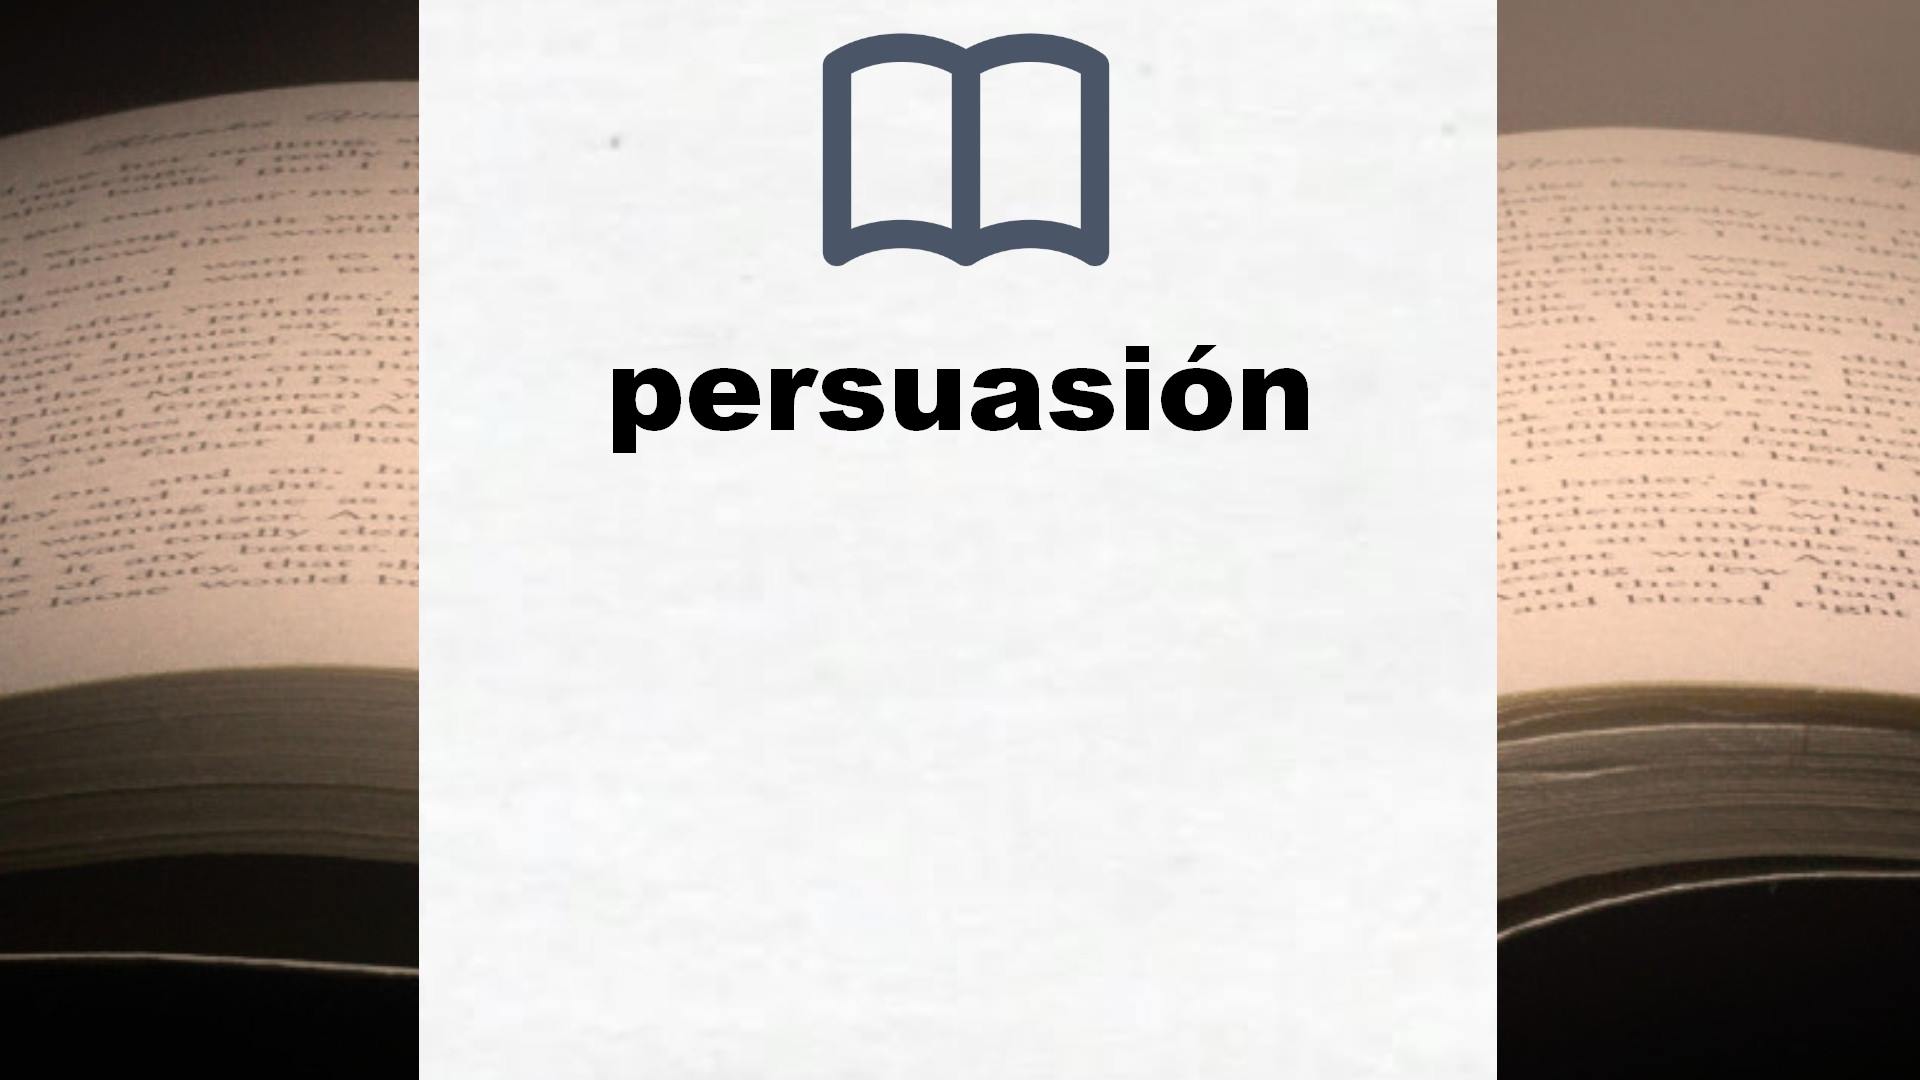 Libros sobre persuasión